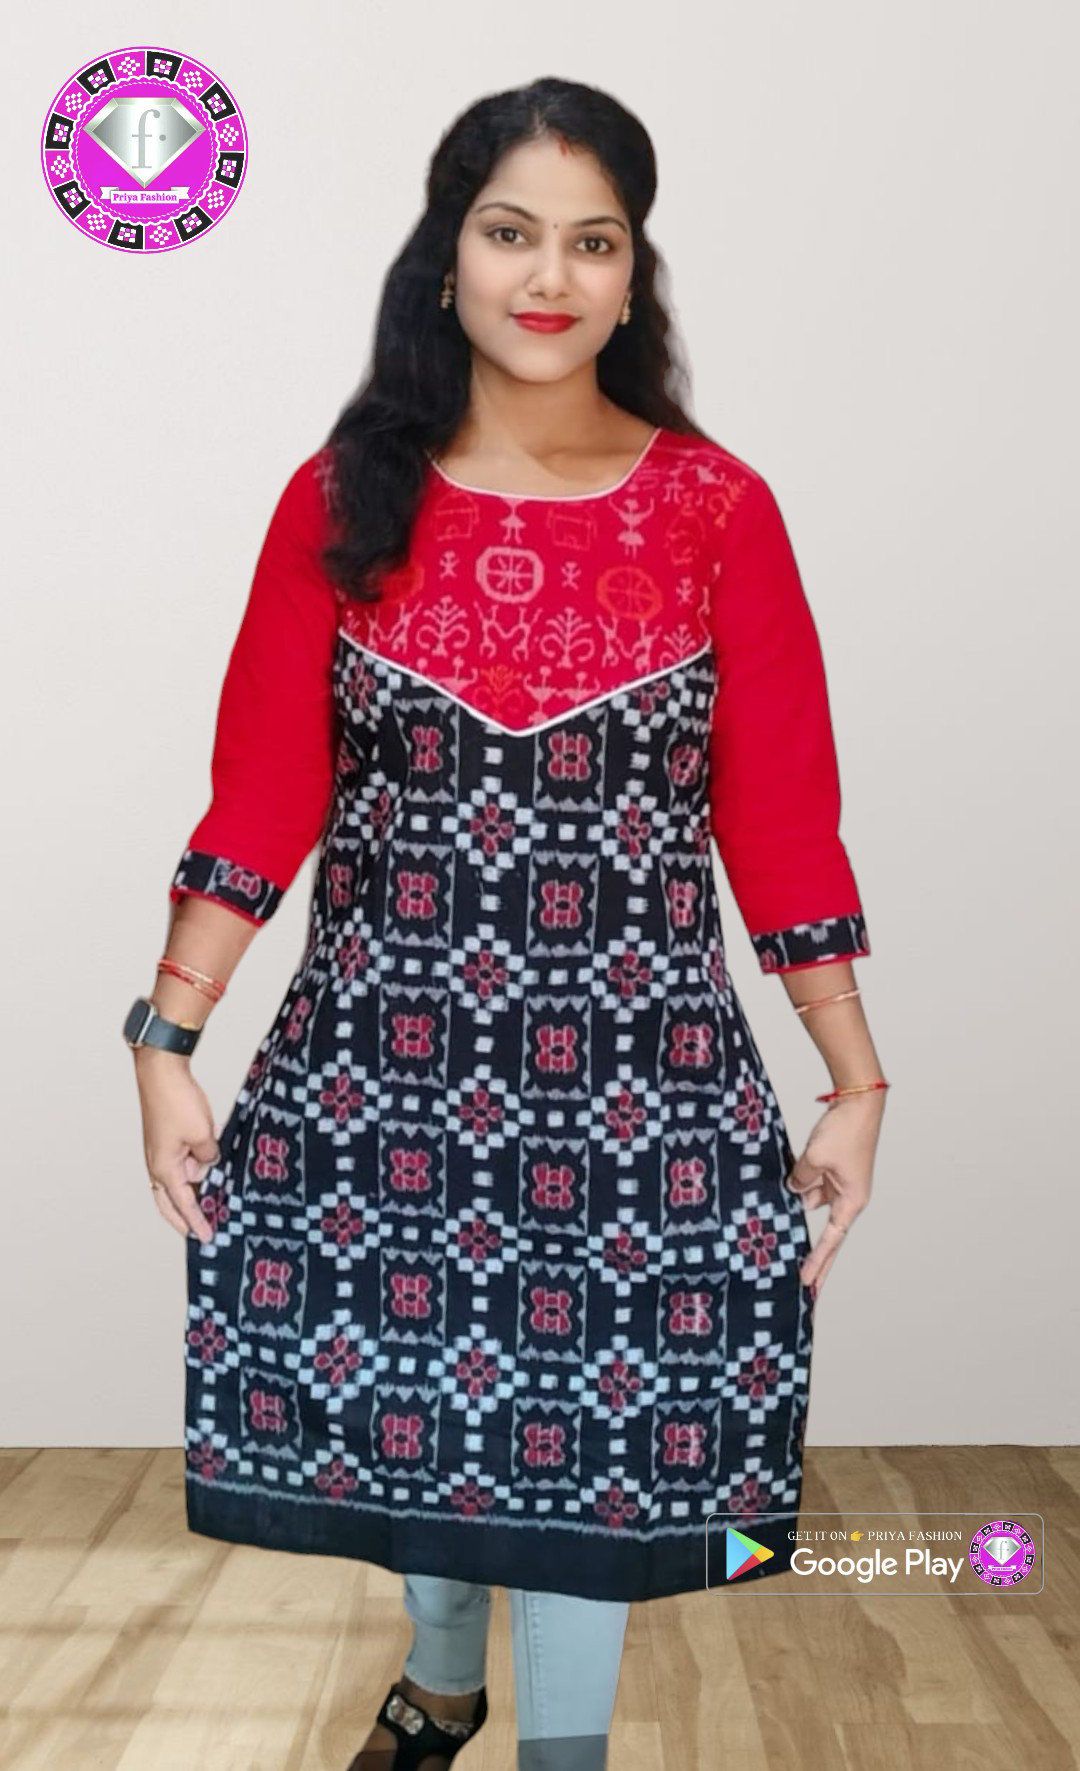 The Best 3 Sambalpuri Dress Designs: Tradition Meets Modernity